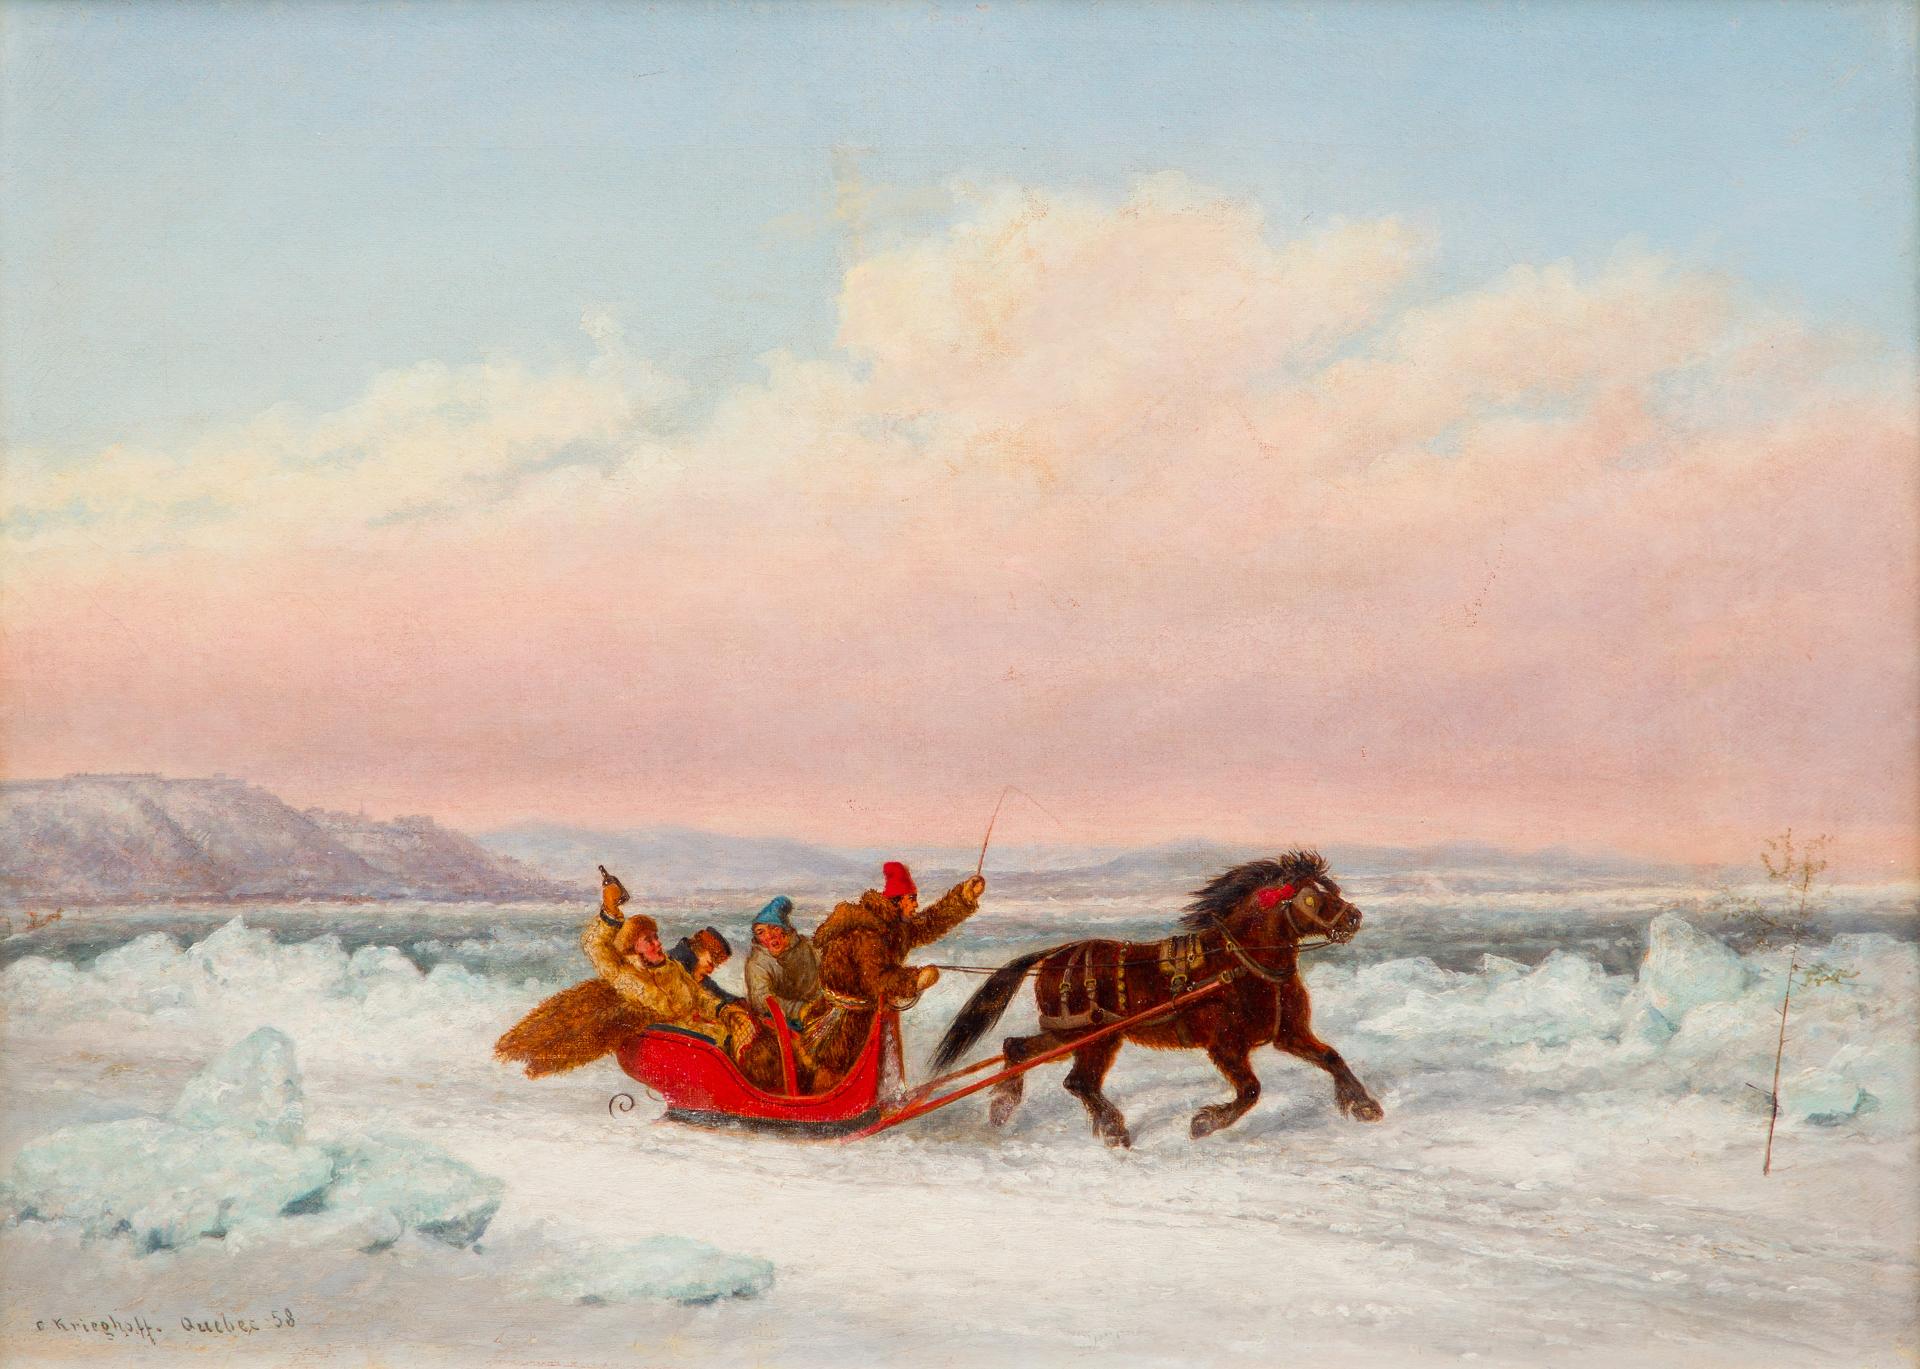 Cornelius David Krieghoff (1815-1872) - On the St. Lawrence, 1858